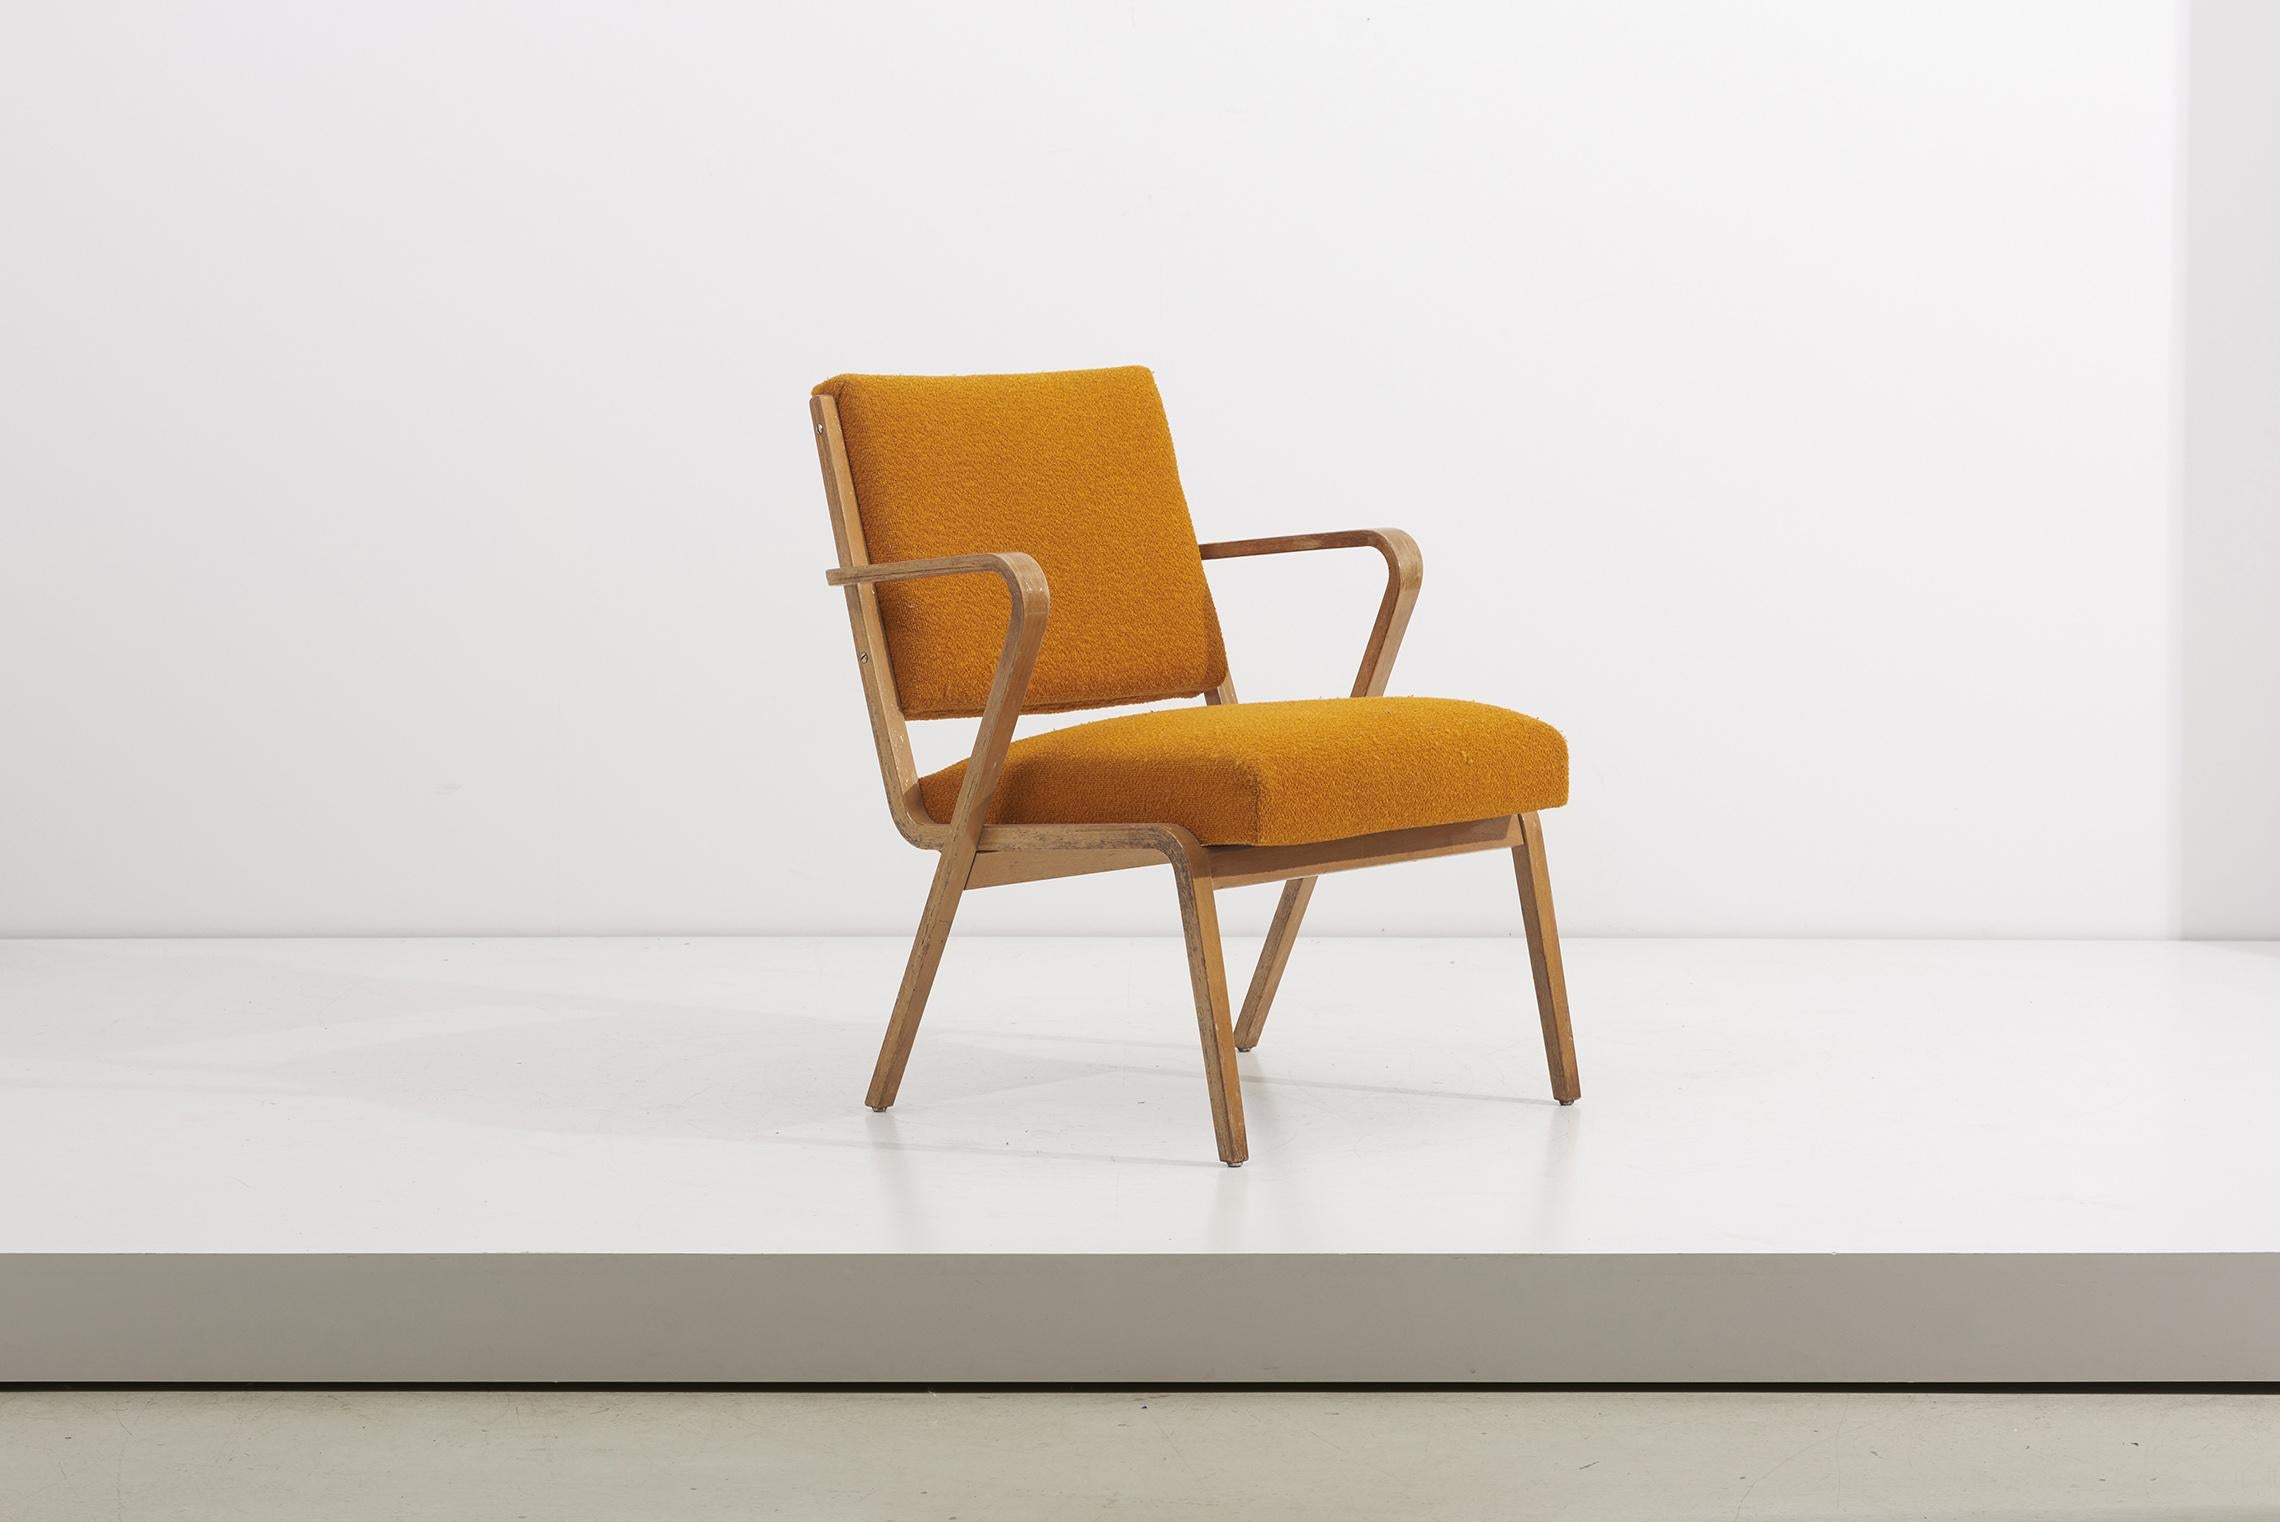 Set of 2 easy chairs designed by architect Selman Selmanagic in 1957 for the East German manufacturer VEB Deutsche Werkstätten Hellerau.
Good original condition.